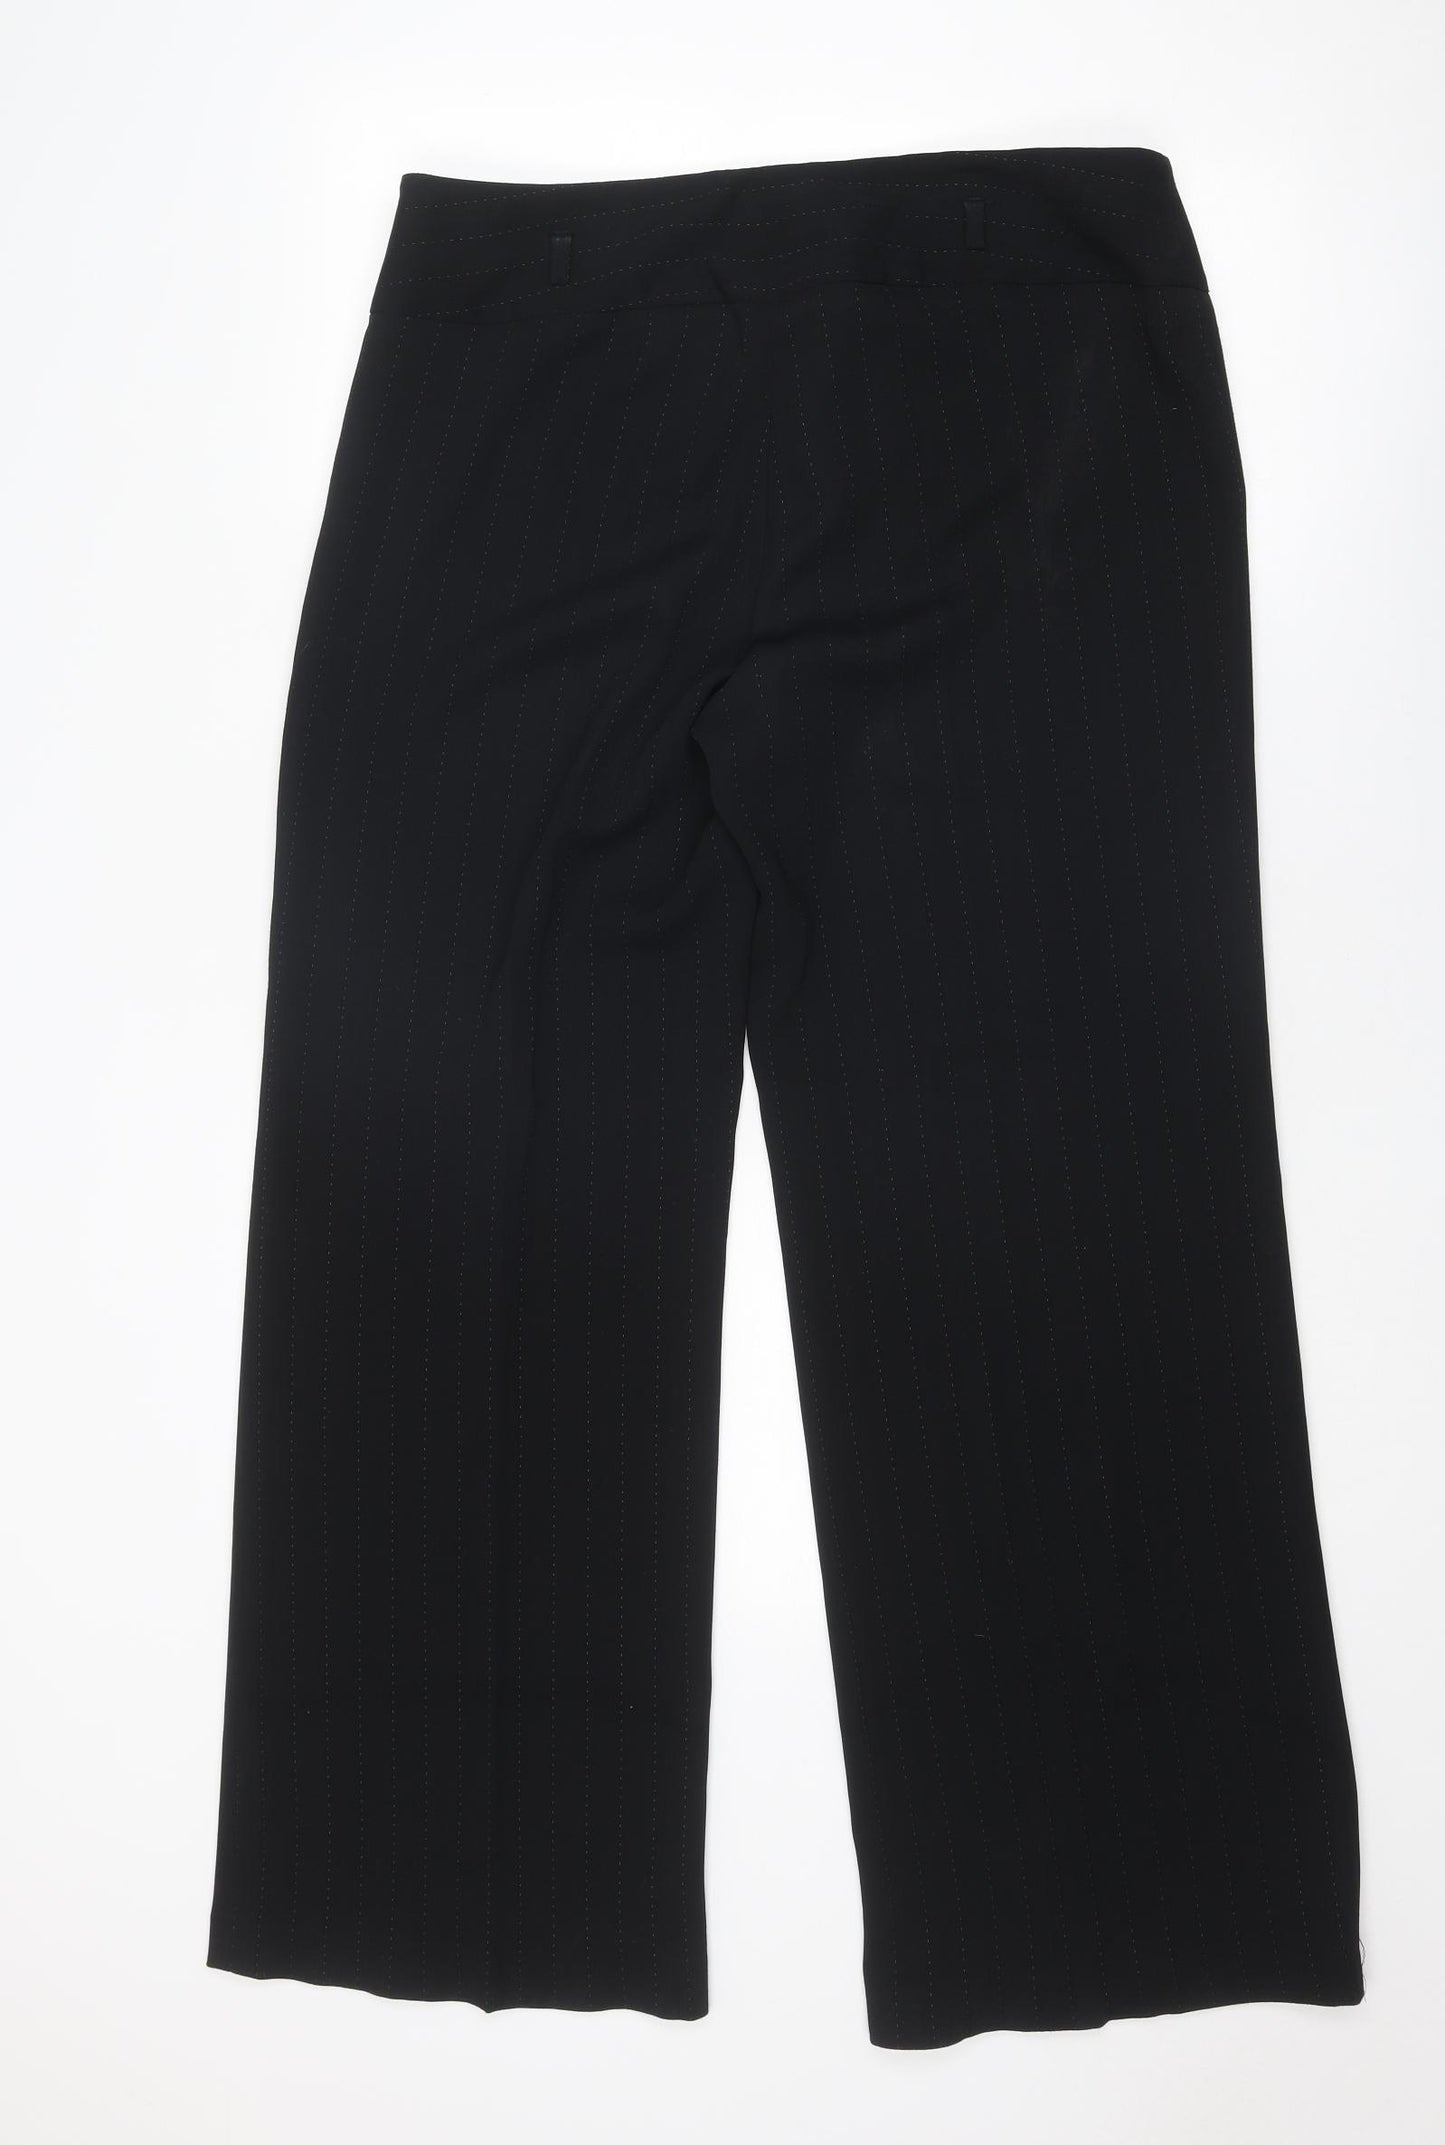 Principles Womens Black Striped Polyester Dress Pants Trousers Size 14 Regular Zip